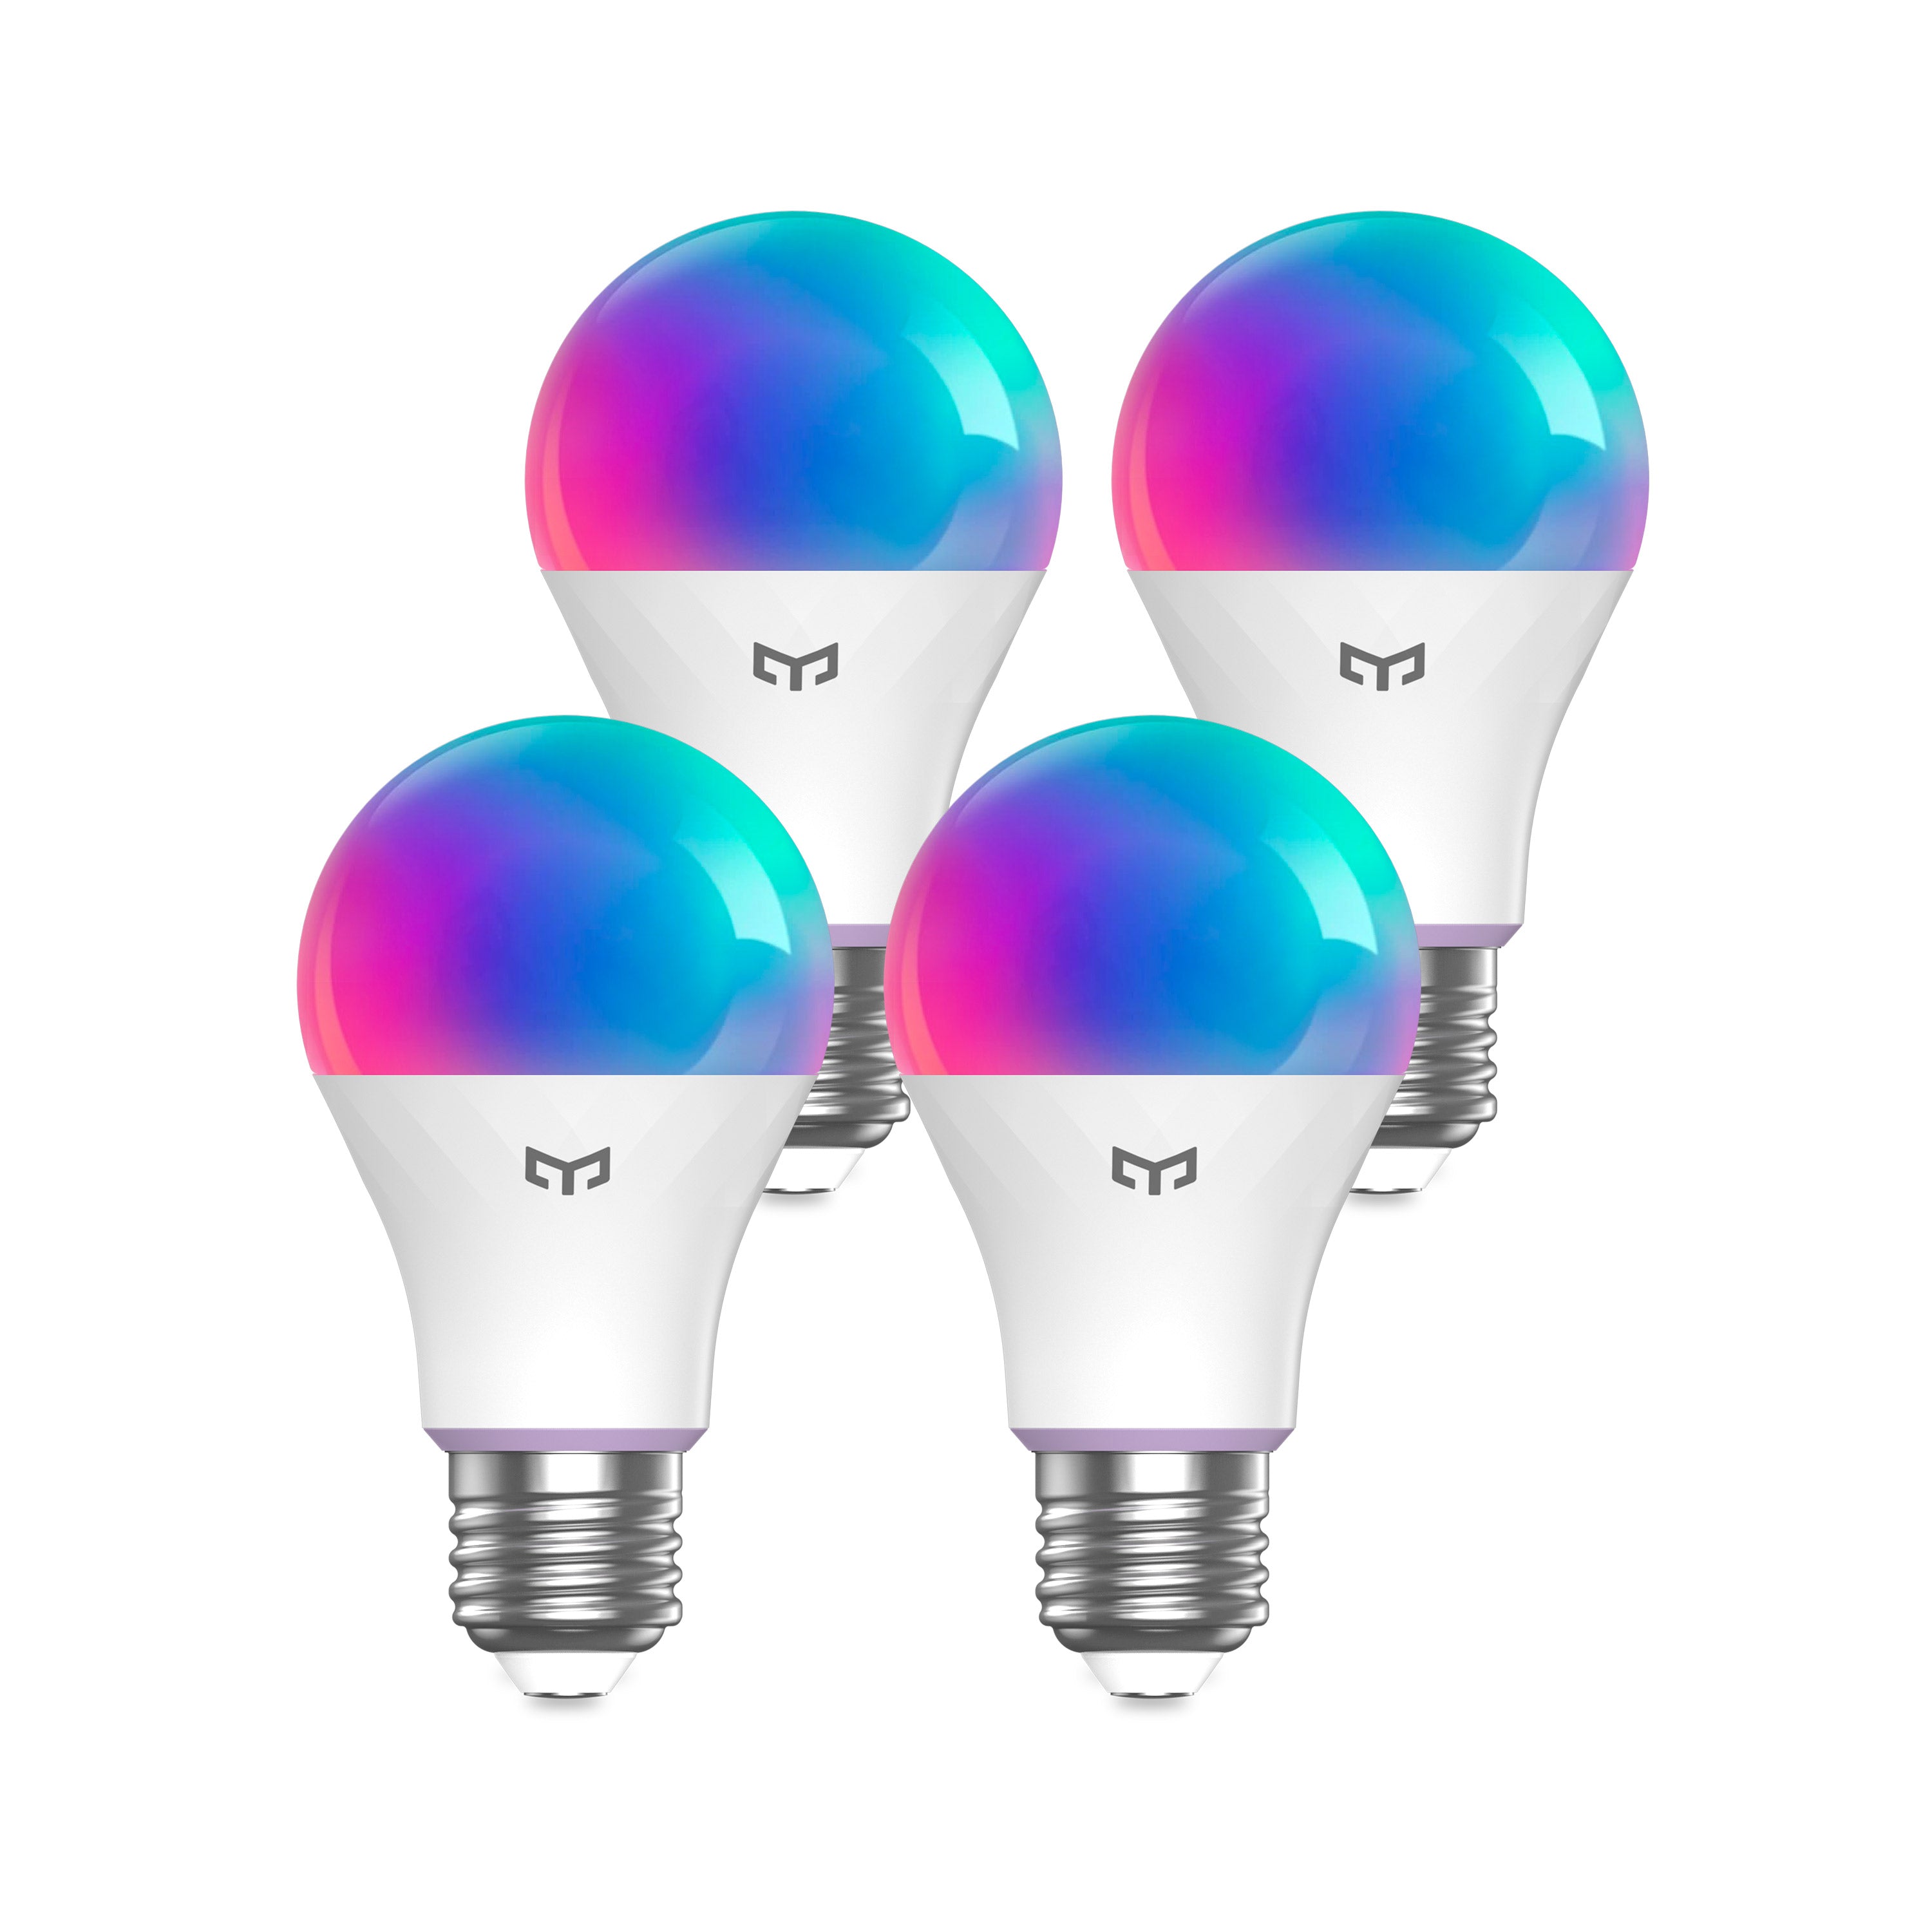 Yeelight Smart Bulb 1S vs W3: Which Should You Buy? – Vesternet